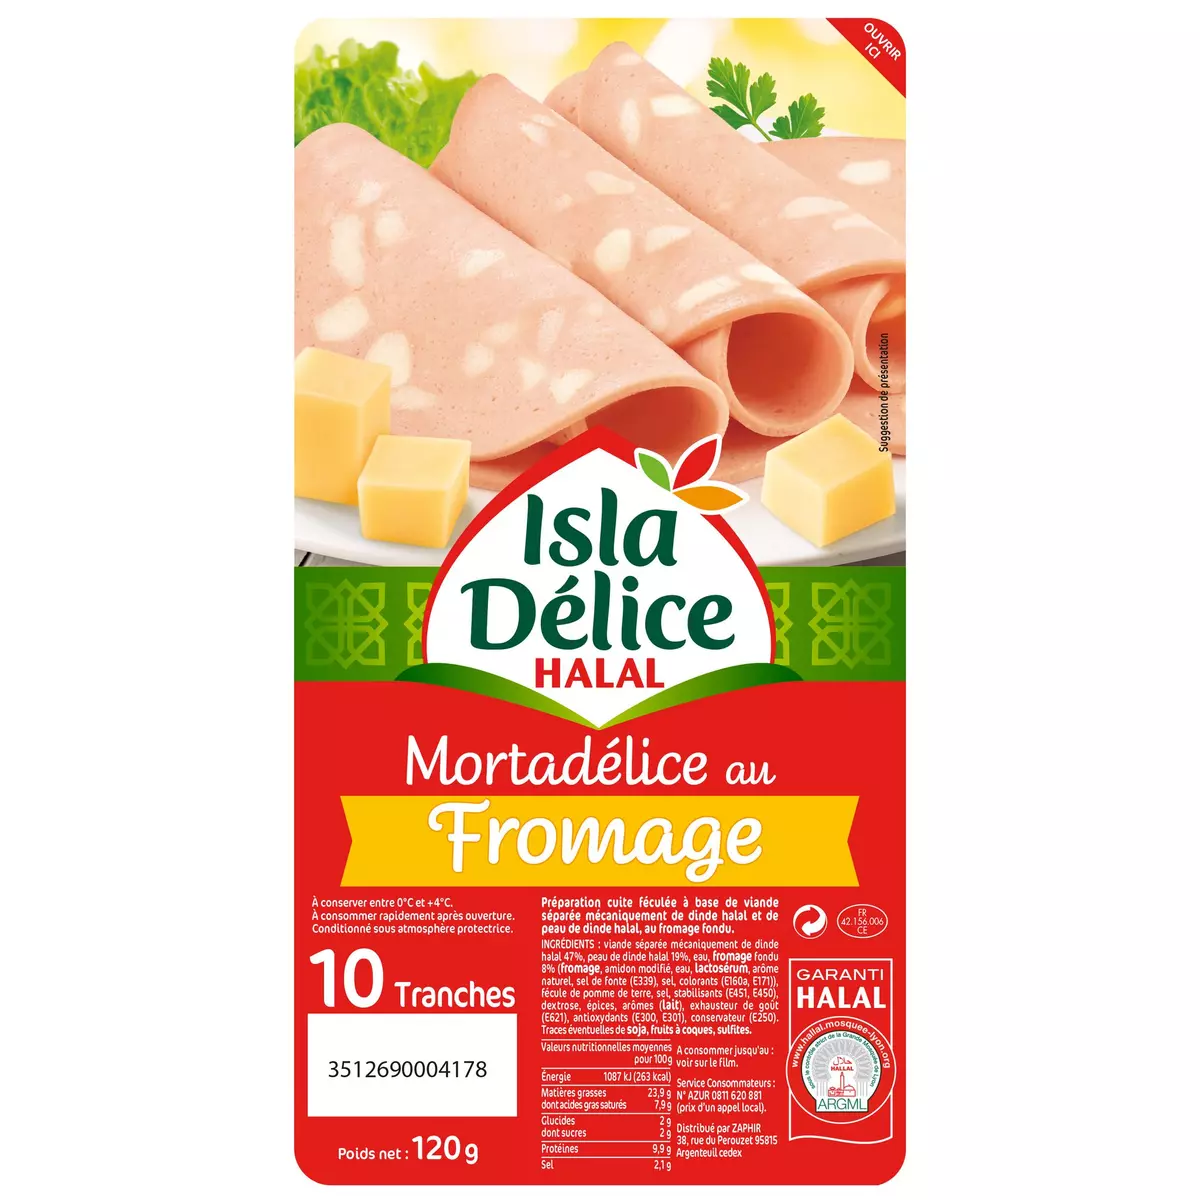 ISLA DELICE Mortadélice au fromage halal 10 tranches 120g